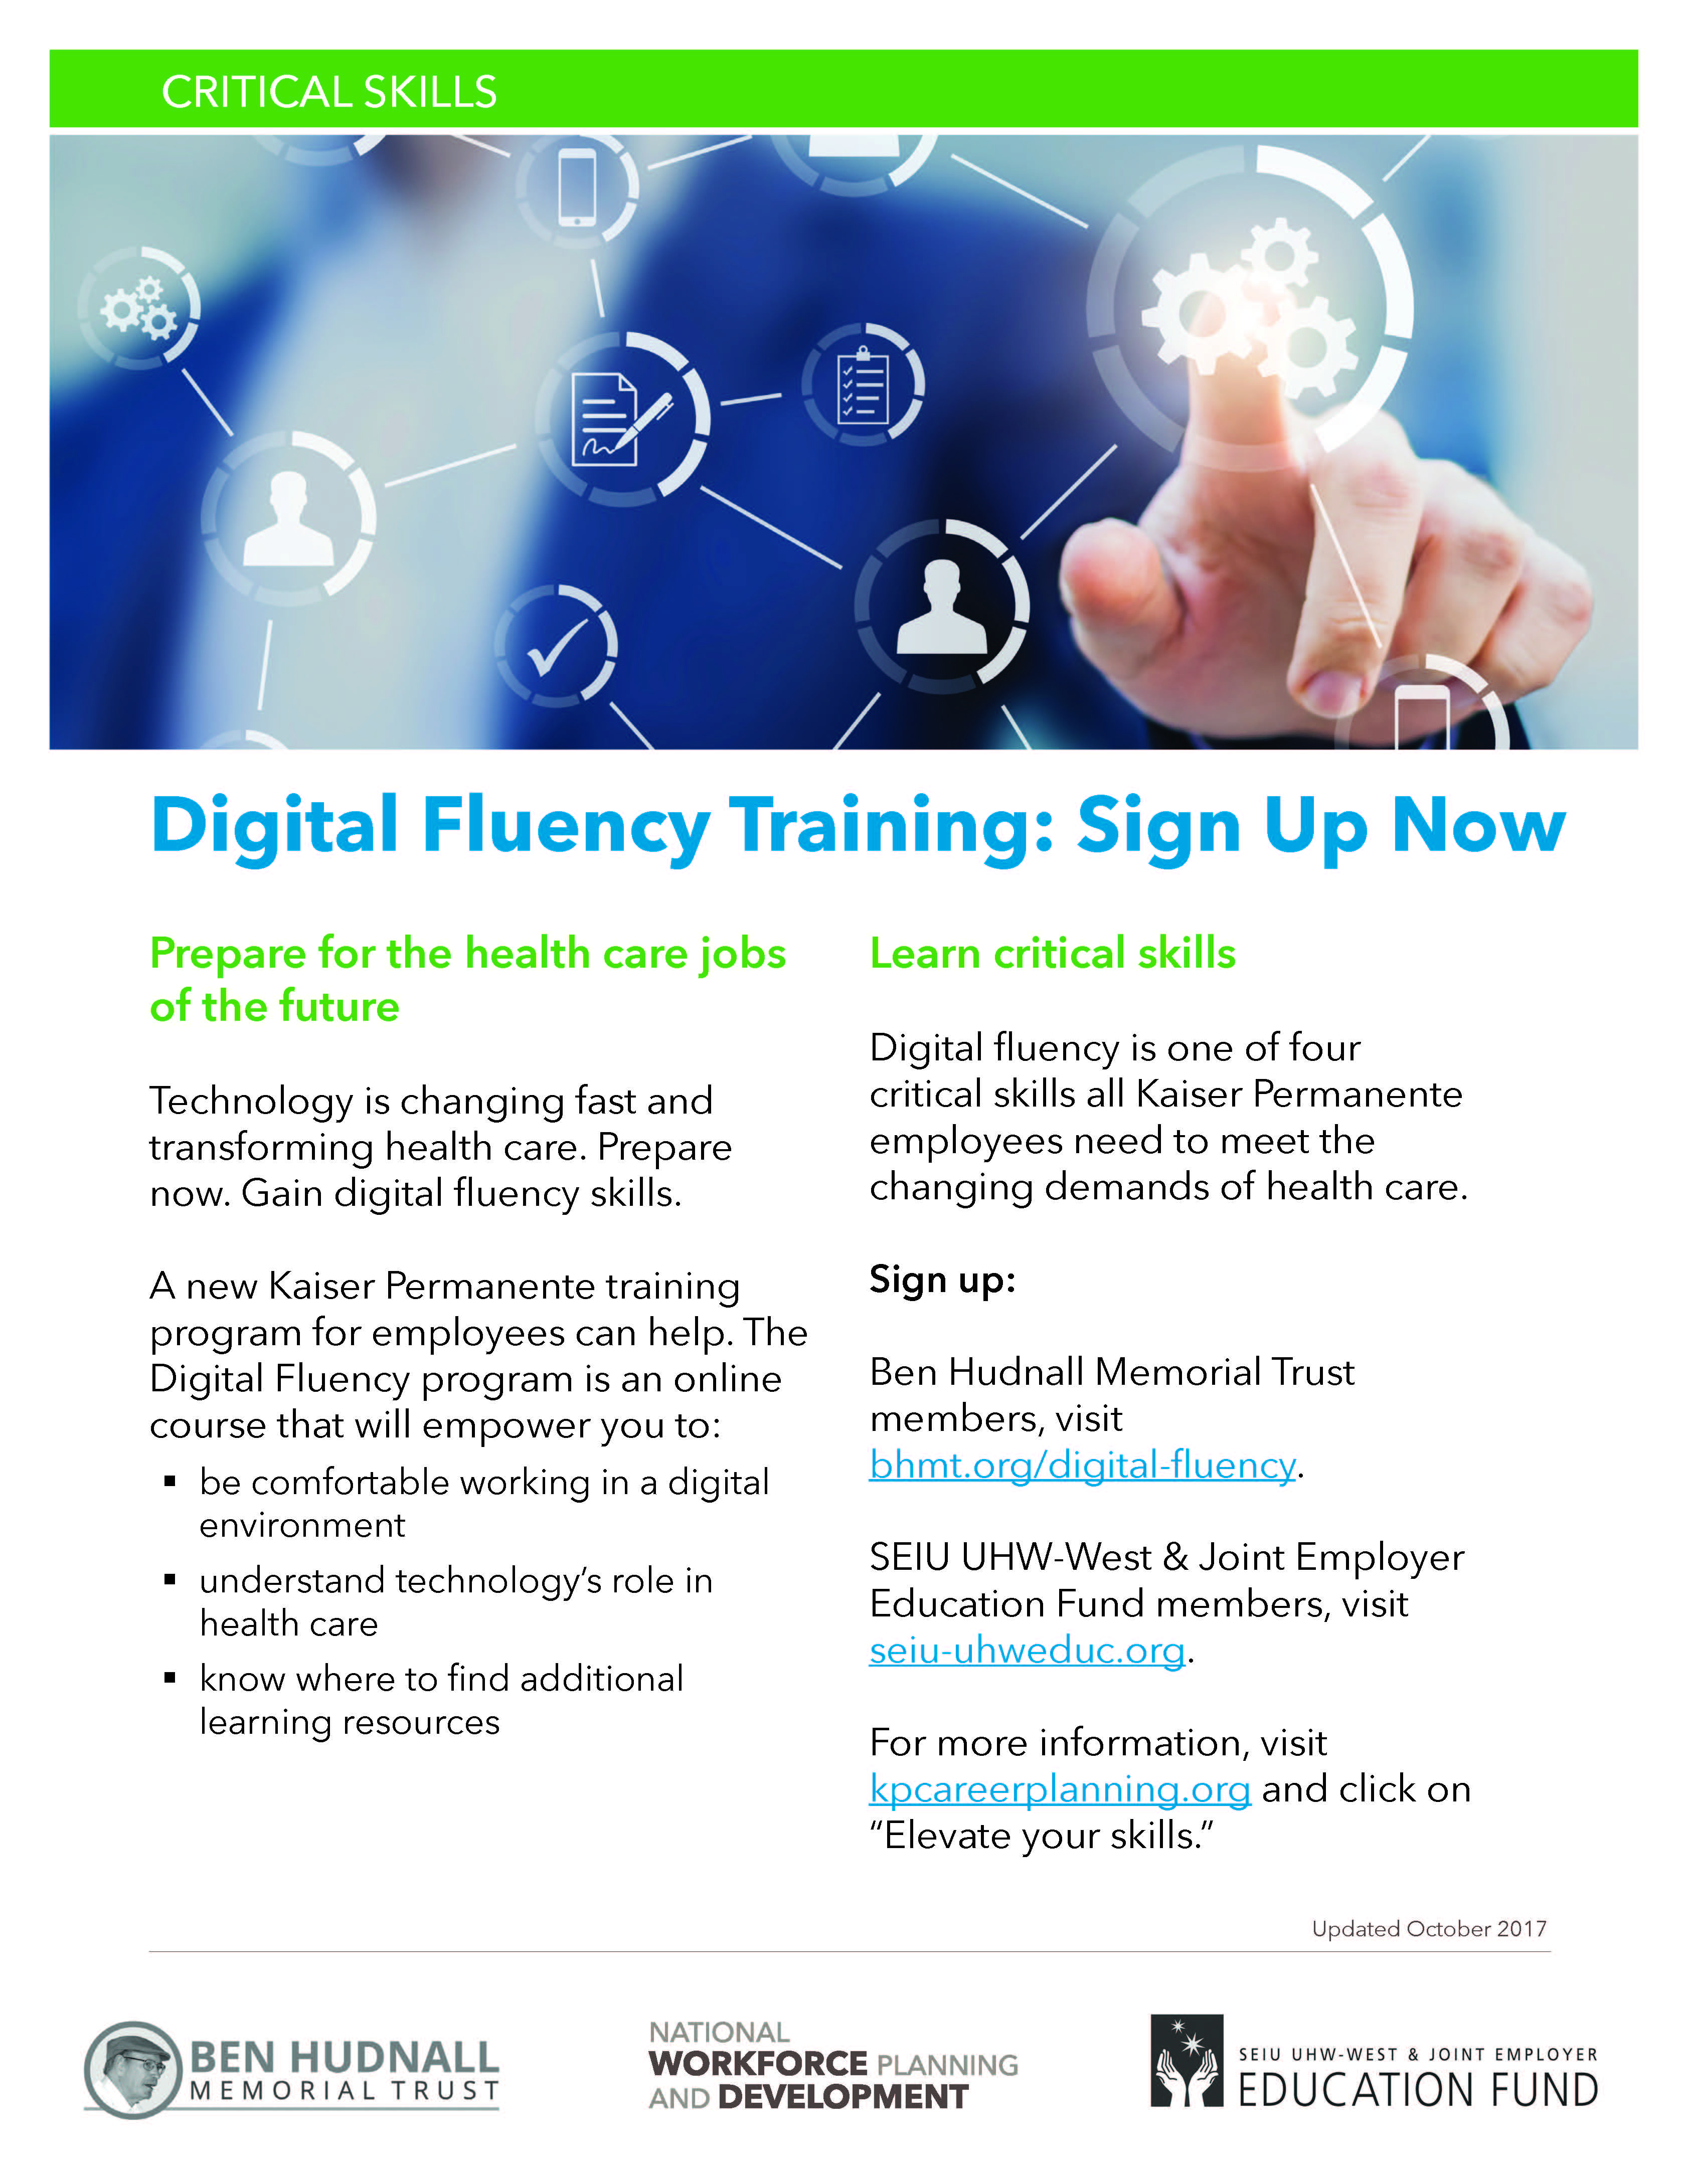 image of digital fluency training flier